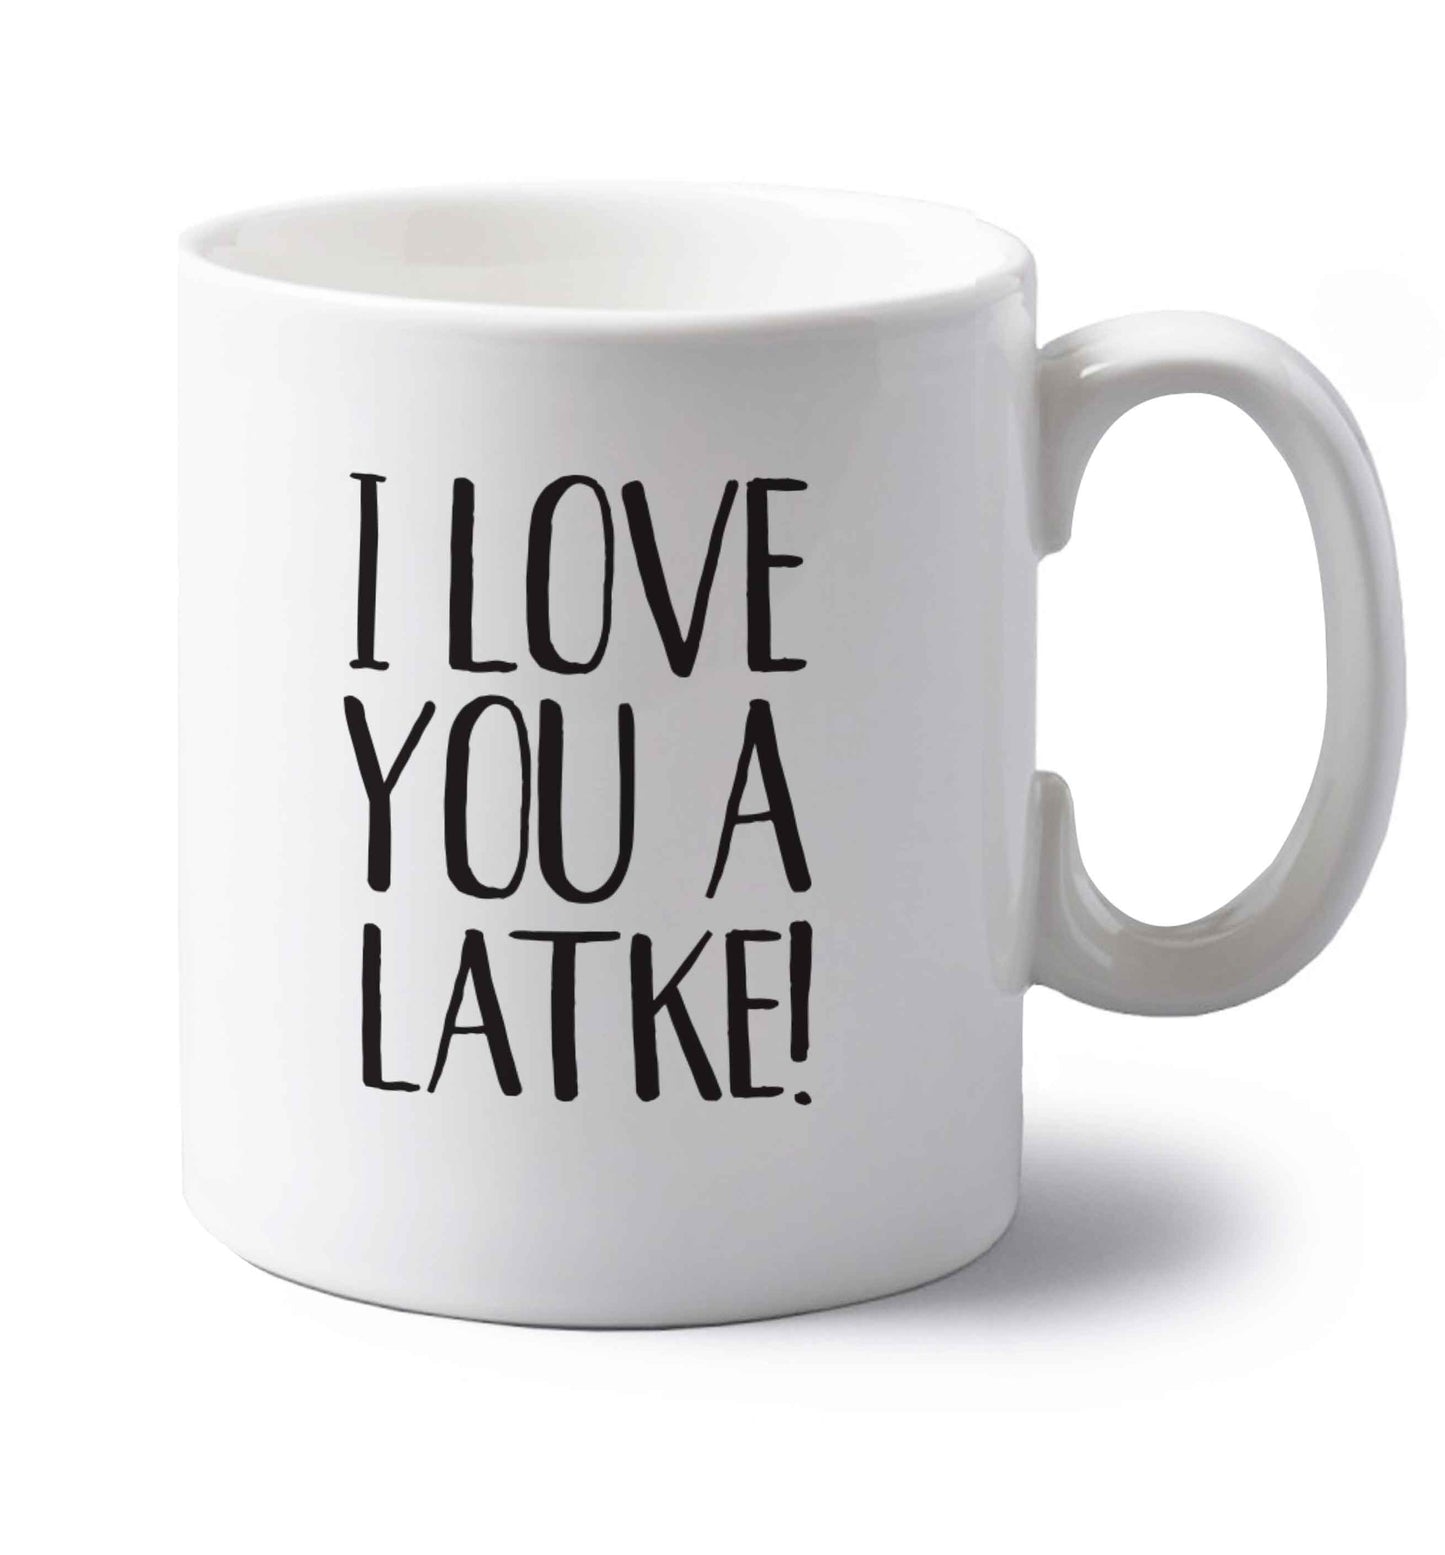 I love you a latke! left handed white ceramic mug 